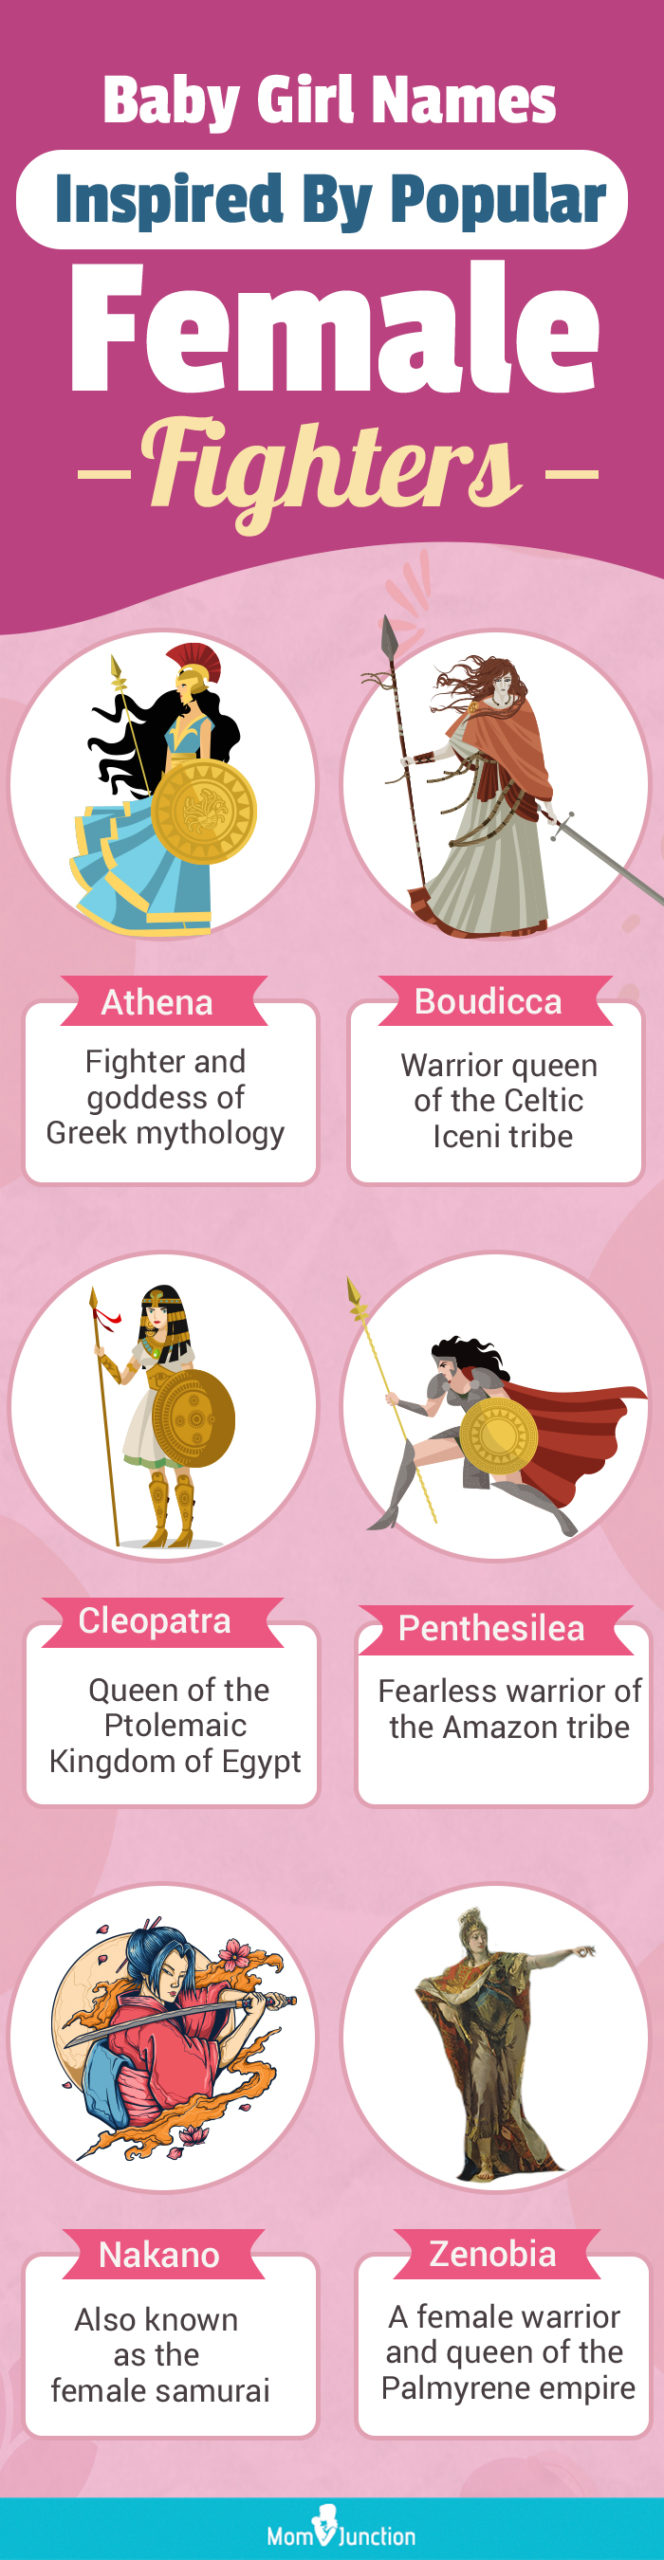 female warriors names (infographic)